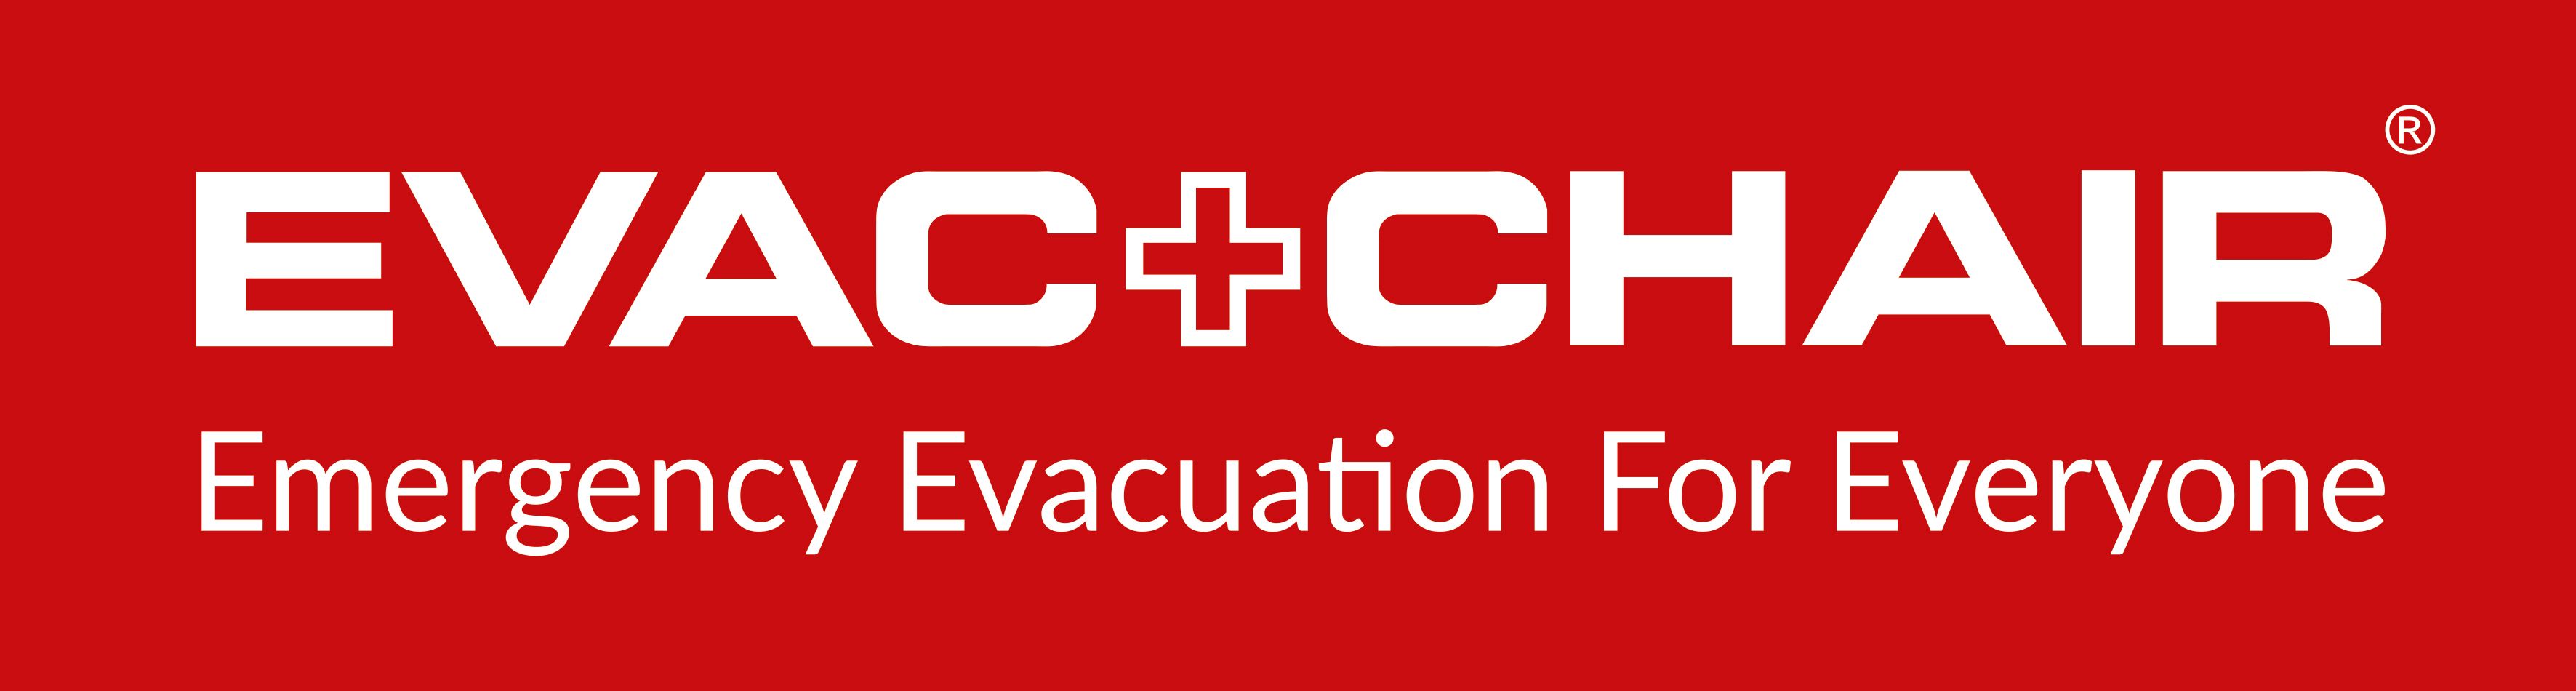 Evac Chair International Ltd